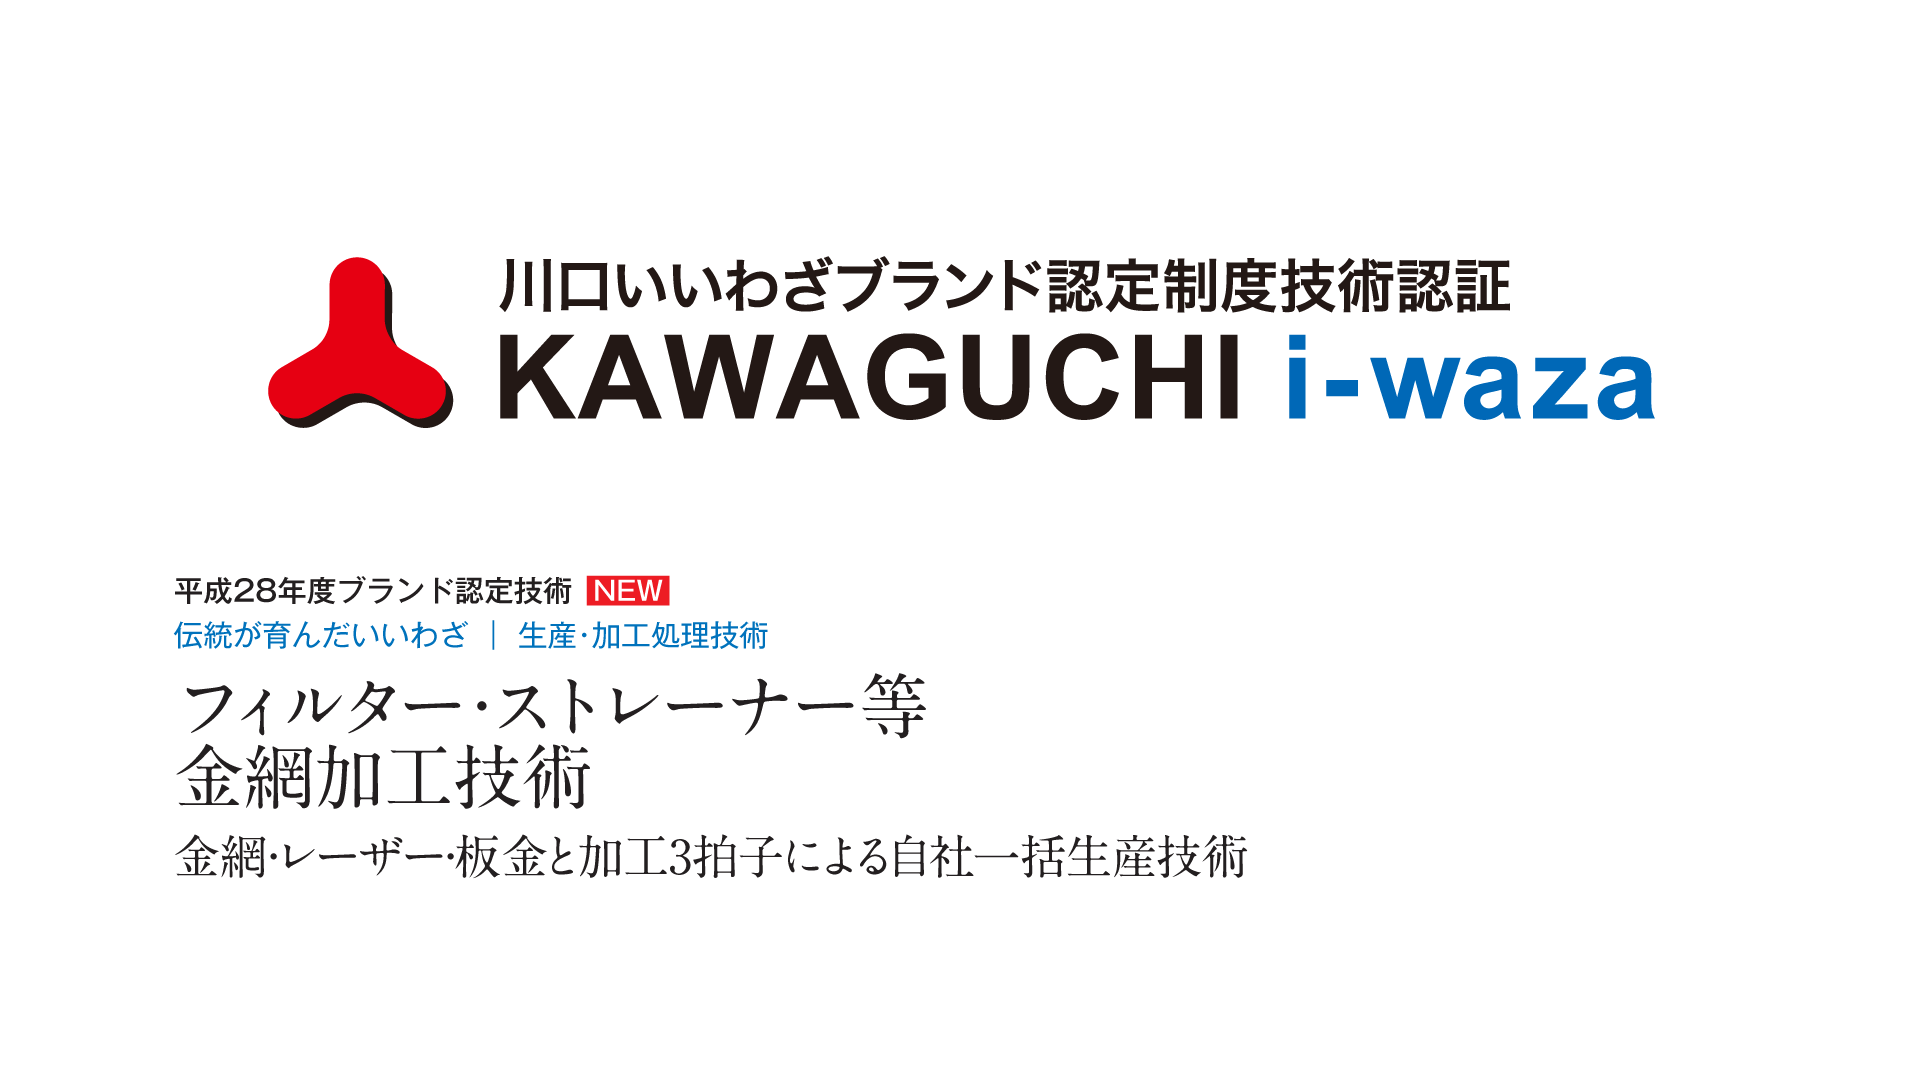 KAWAGUCHI i-wazaブランドに認定を受けました。